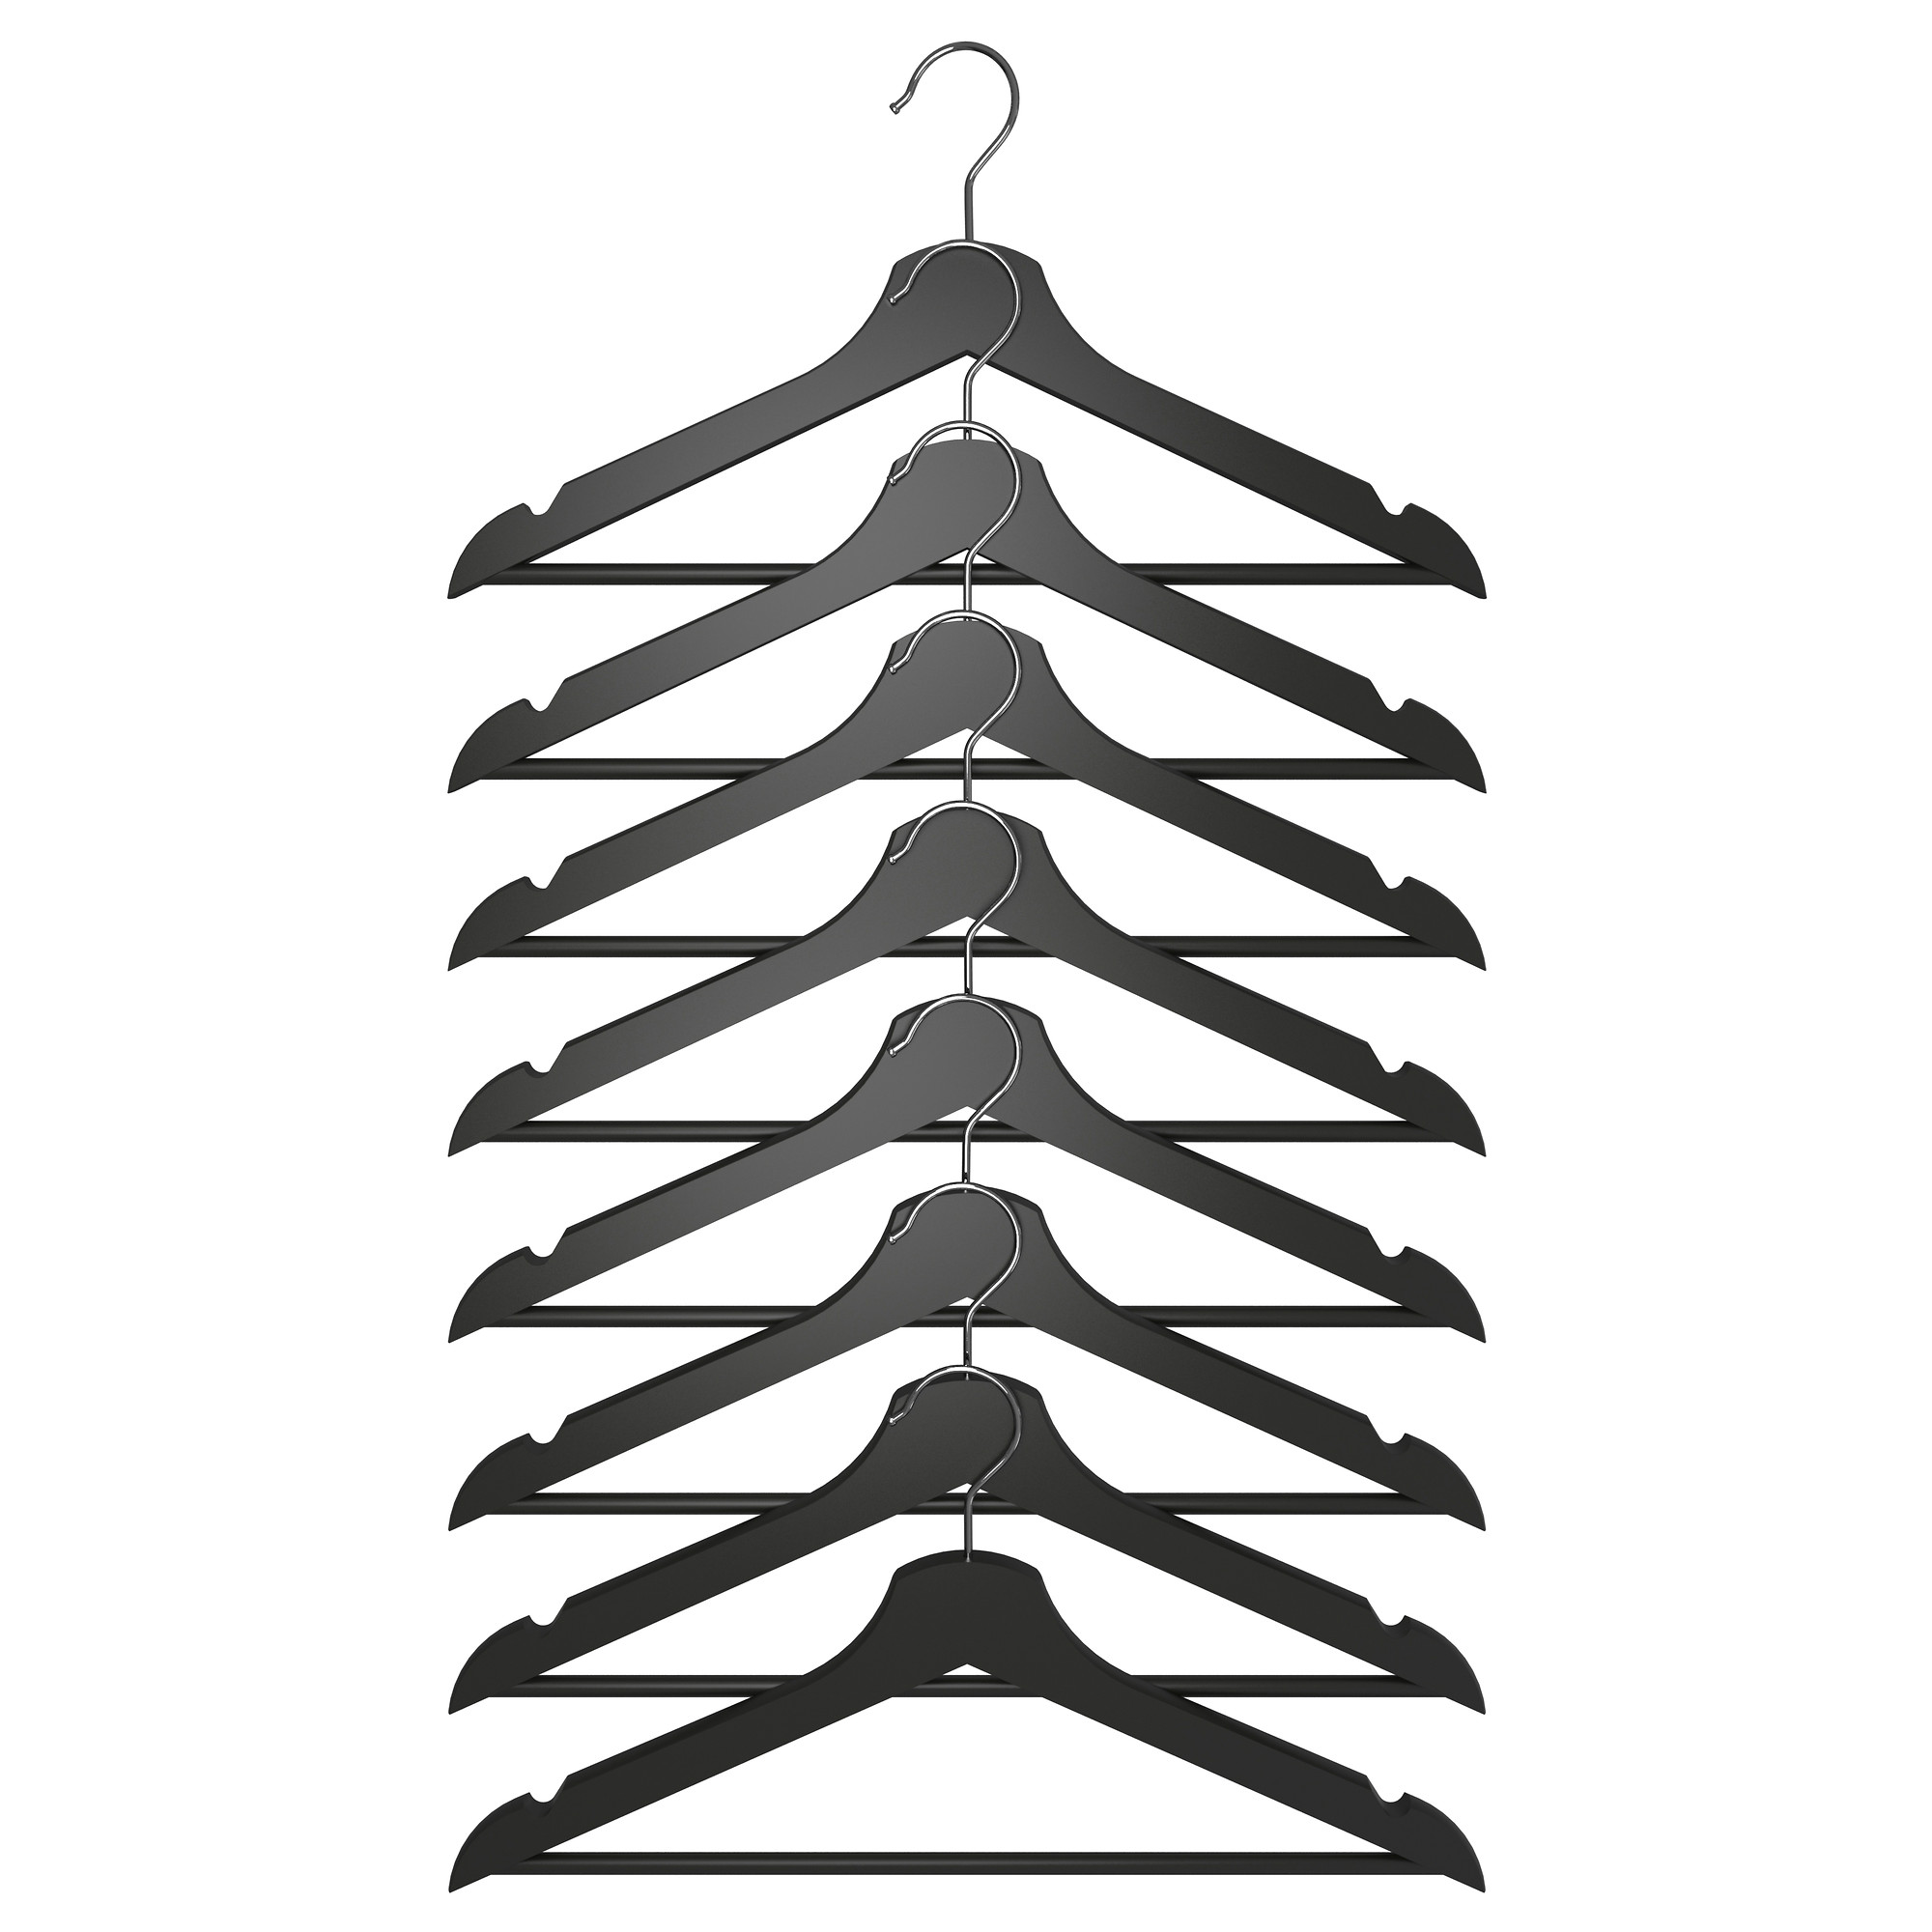 IKEA Hanger Wood Clothes Coat (8 Pack) White Bumerang